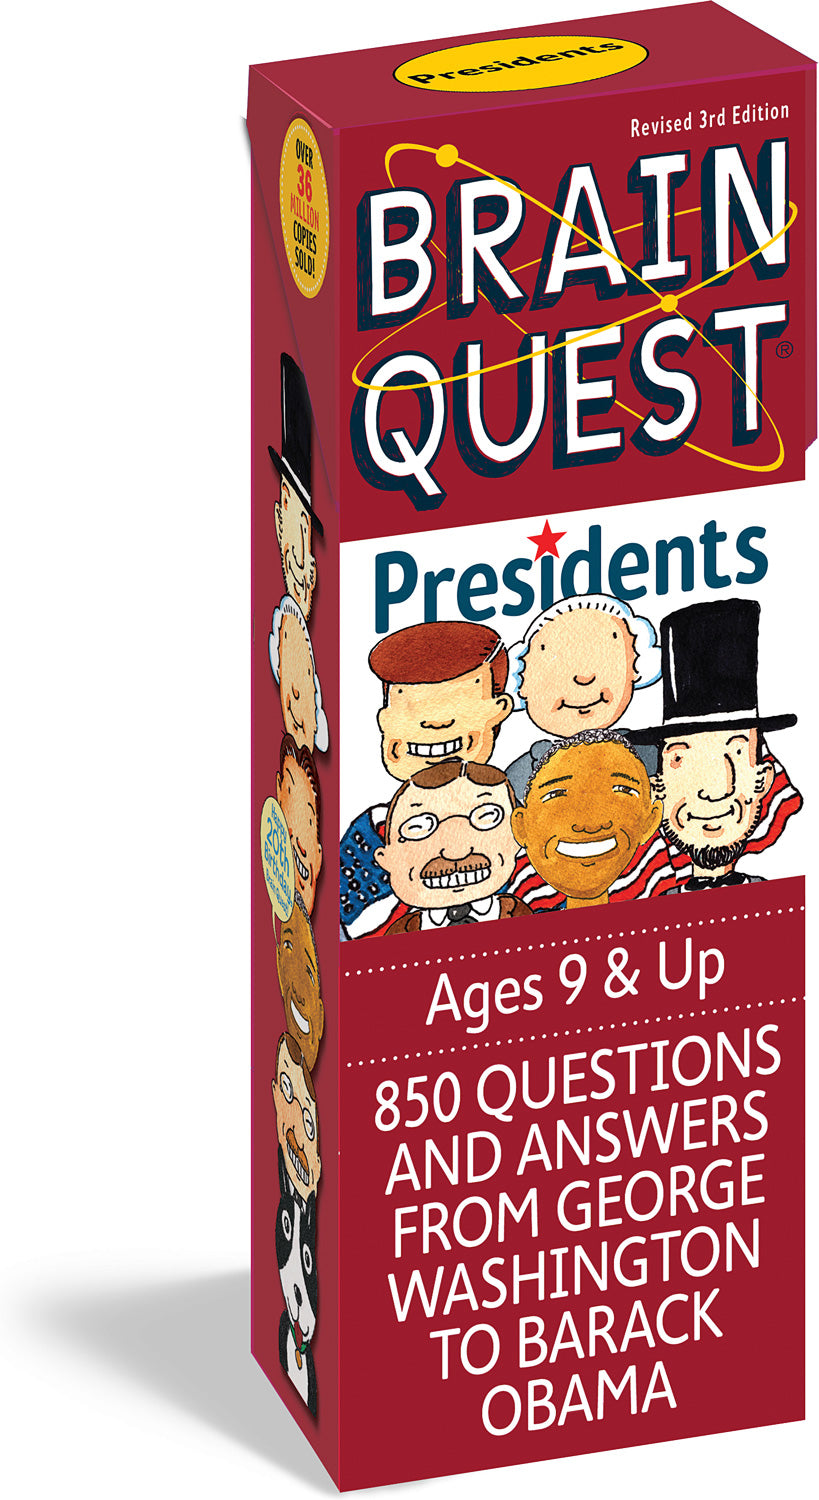 Brain Quest Presidents